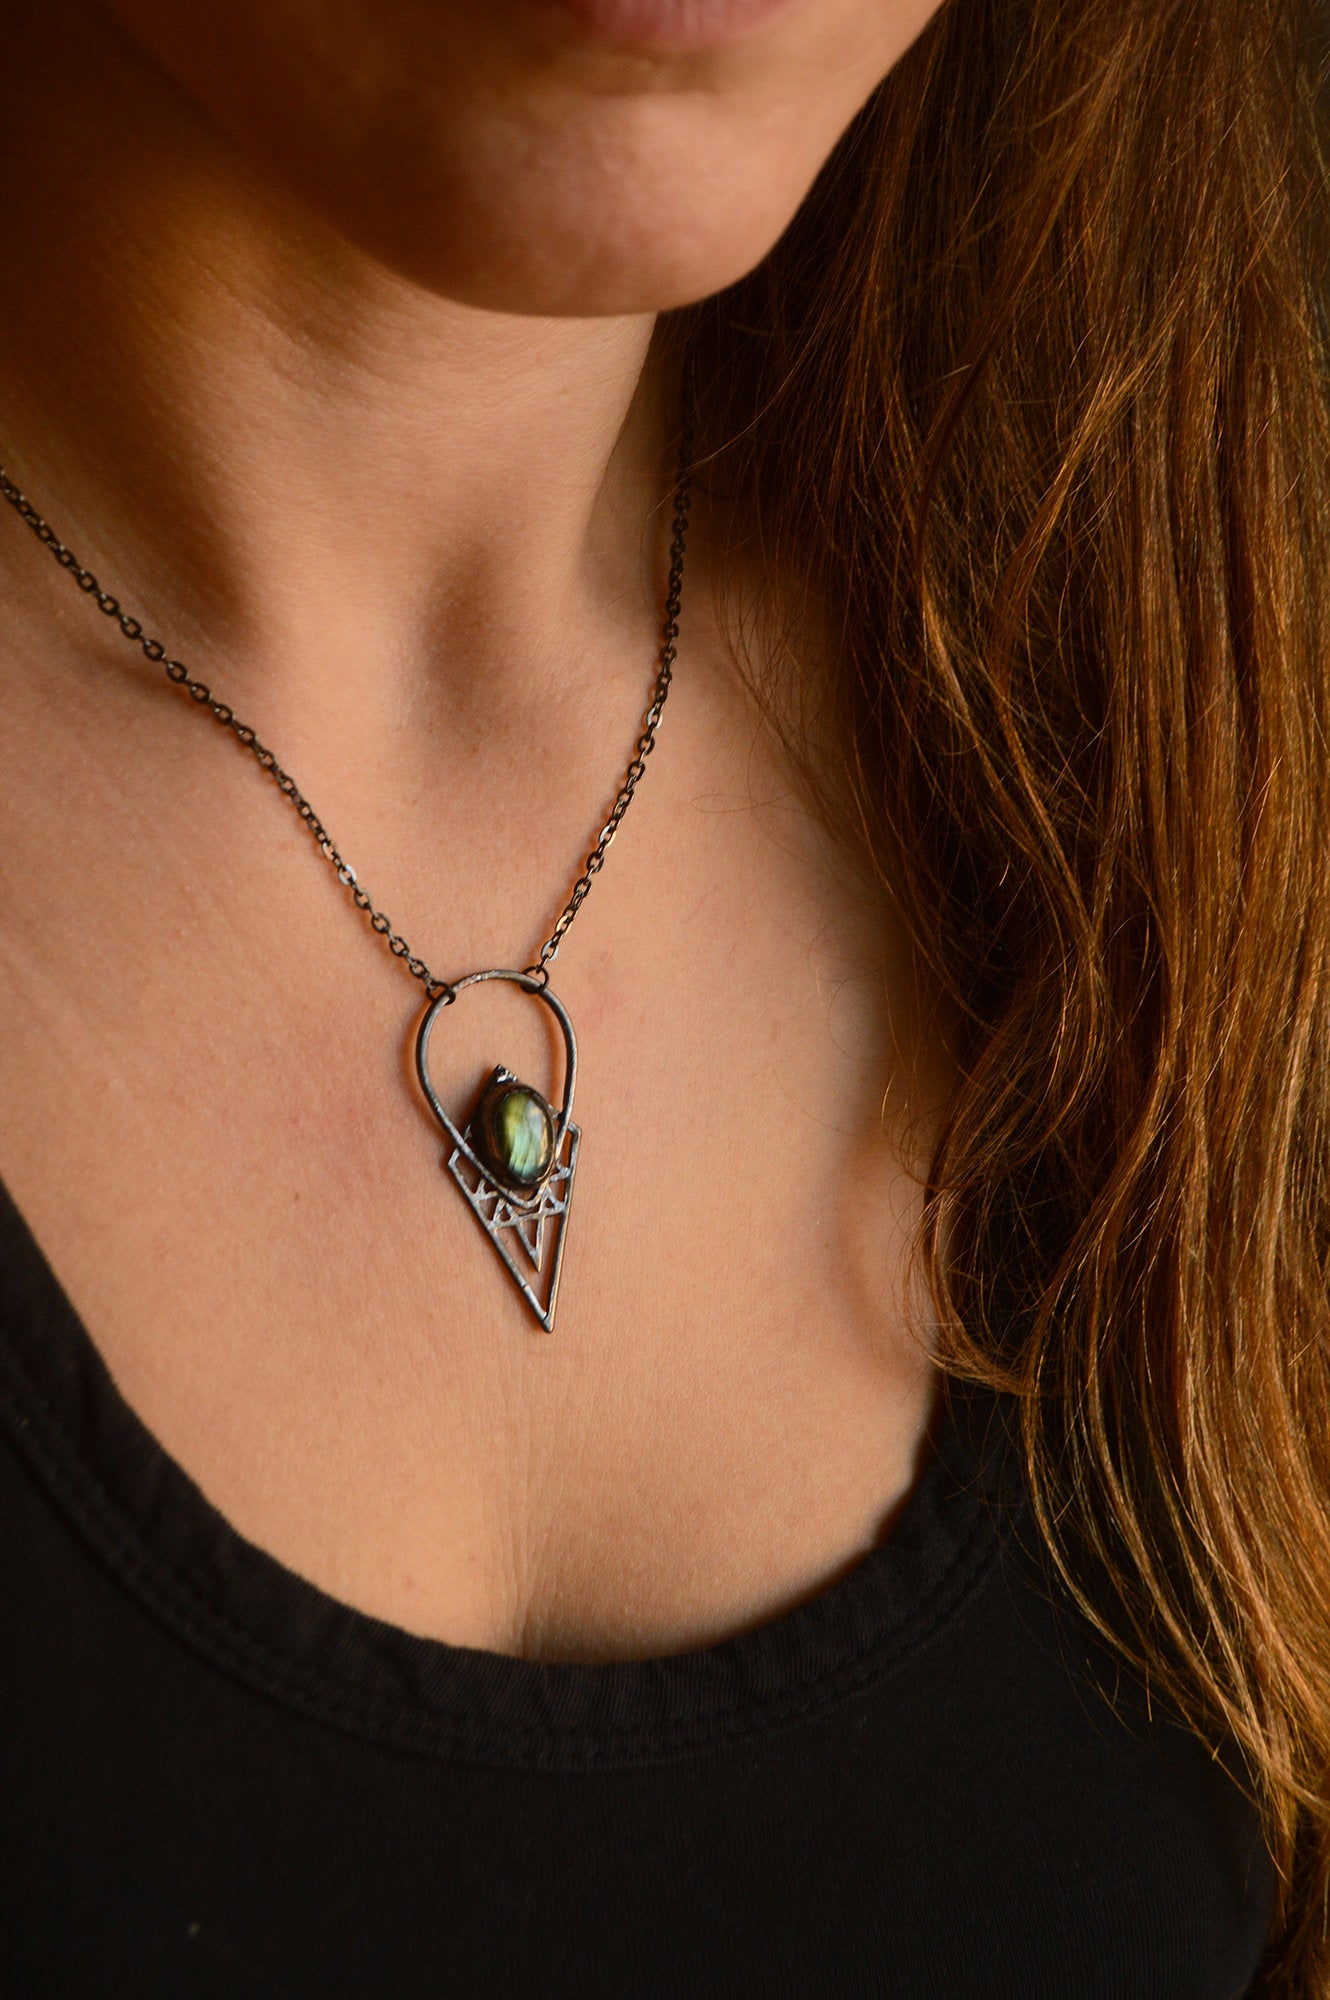 Black copper labradorite geometric necklace.  Witchy magic amulet jewellery. Layering, everyday dark style